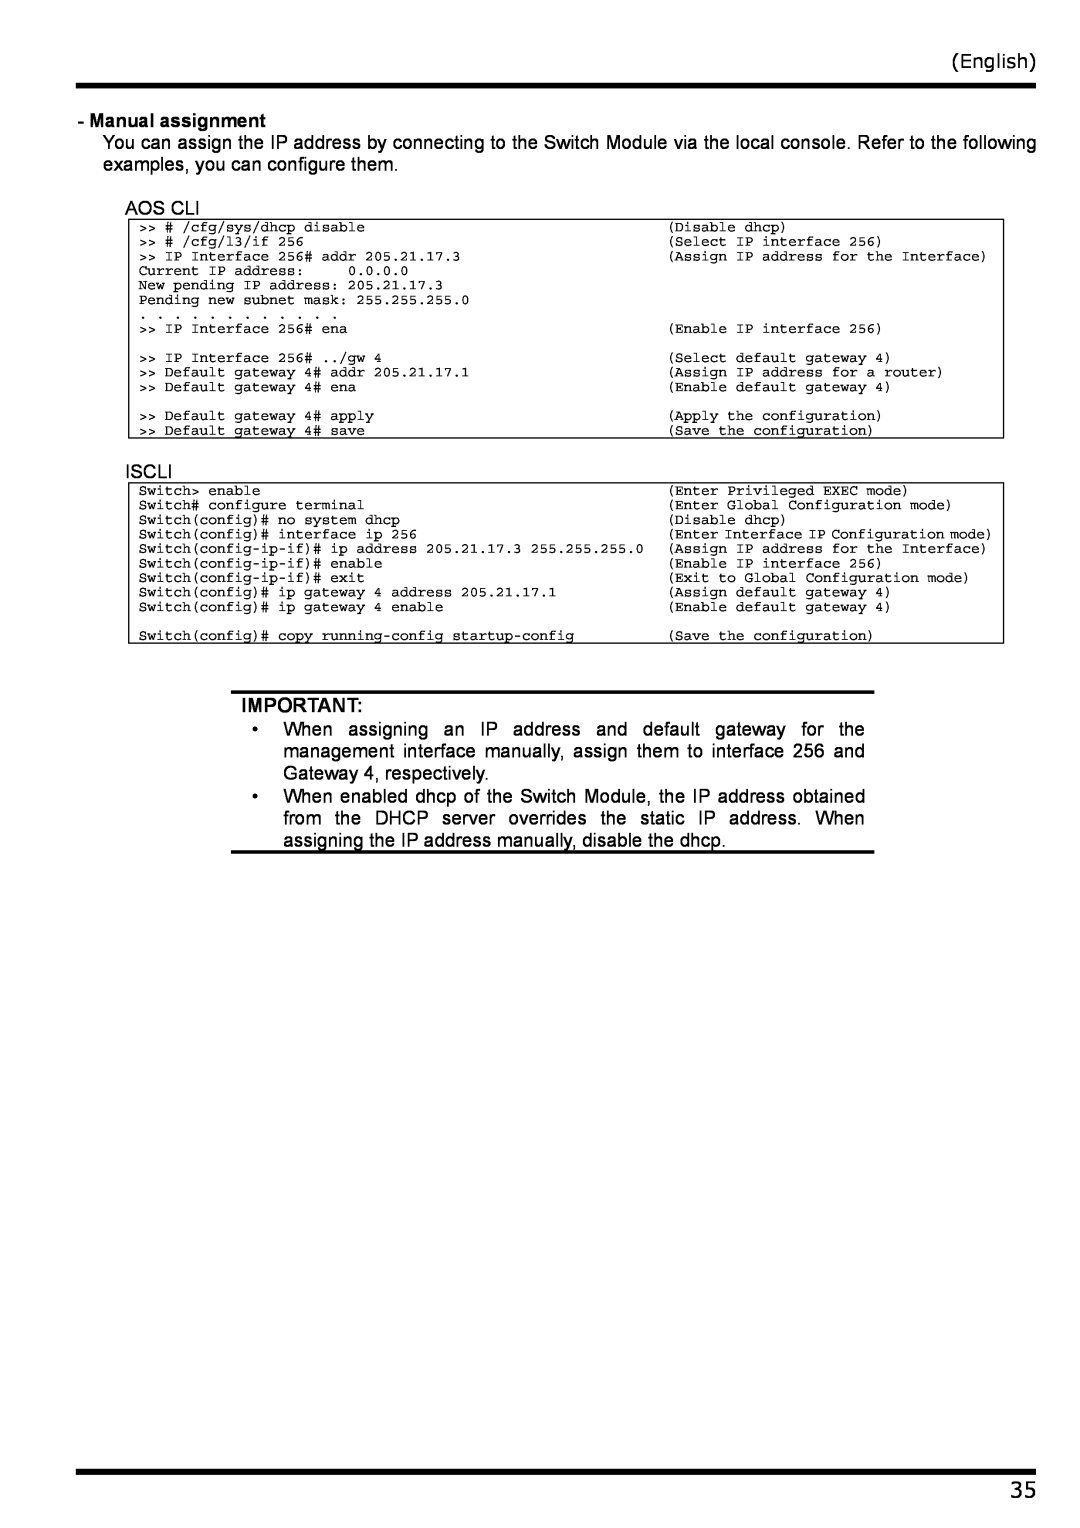 NEC N8406-022 manual Manual assignment 